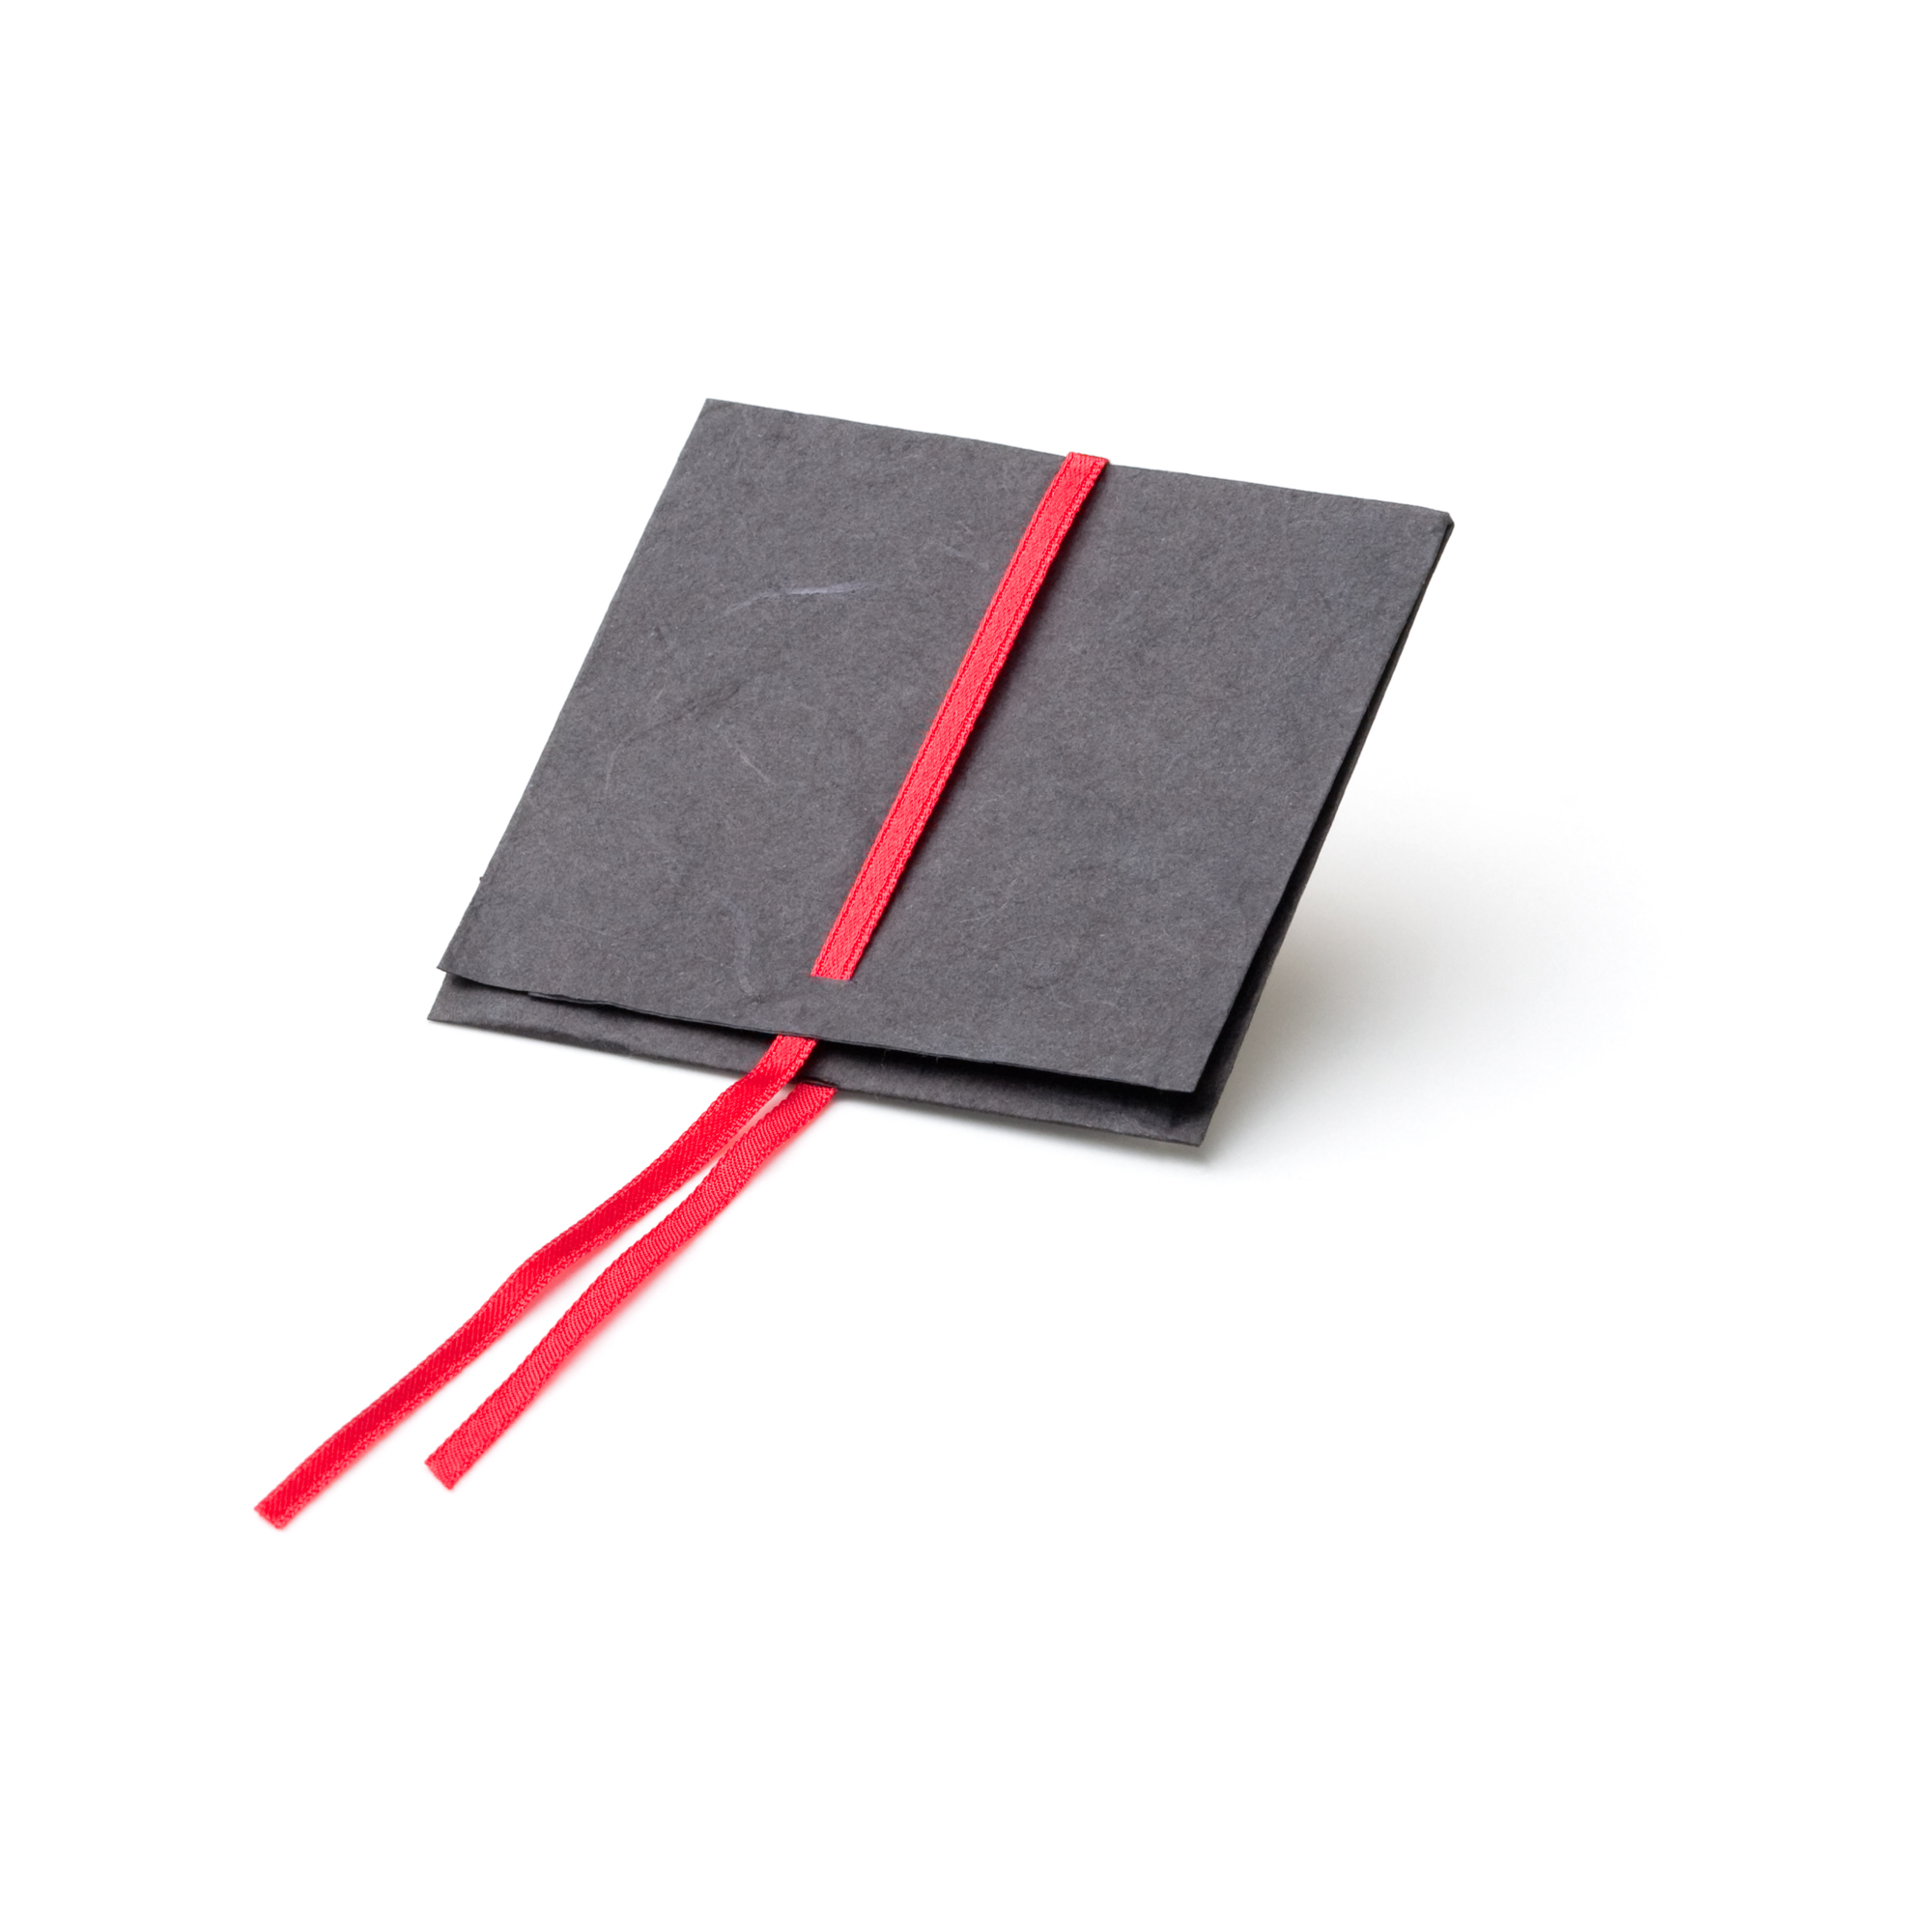 Paperbag klein, 80 x 80 mm, schwarz/rotes Band